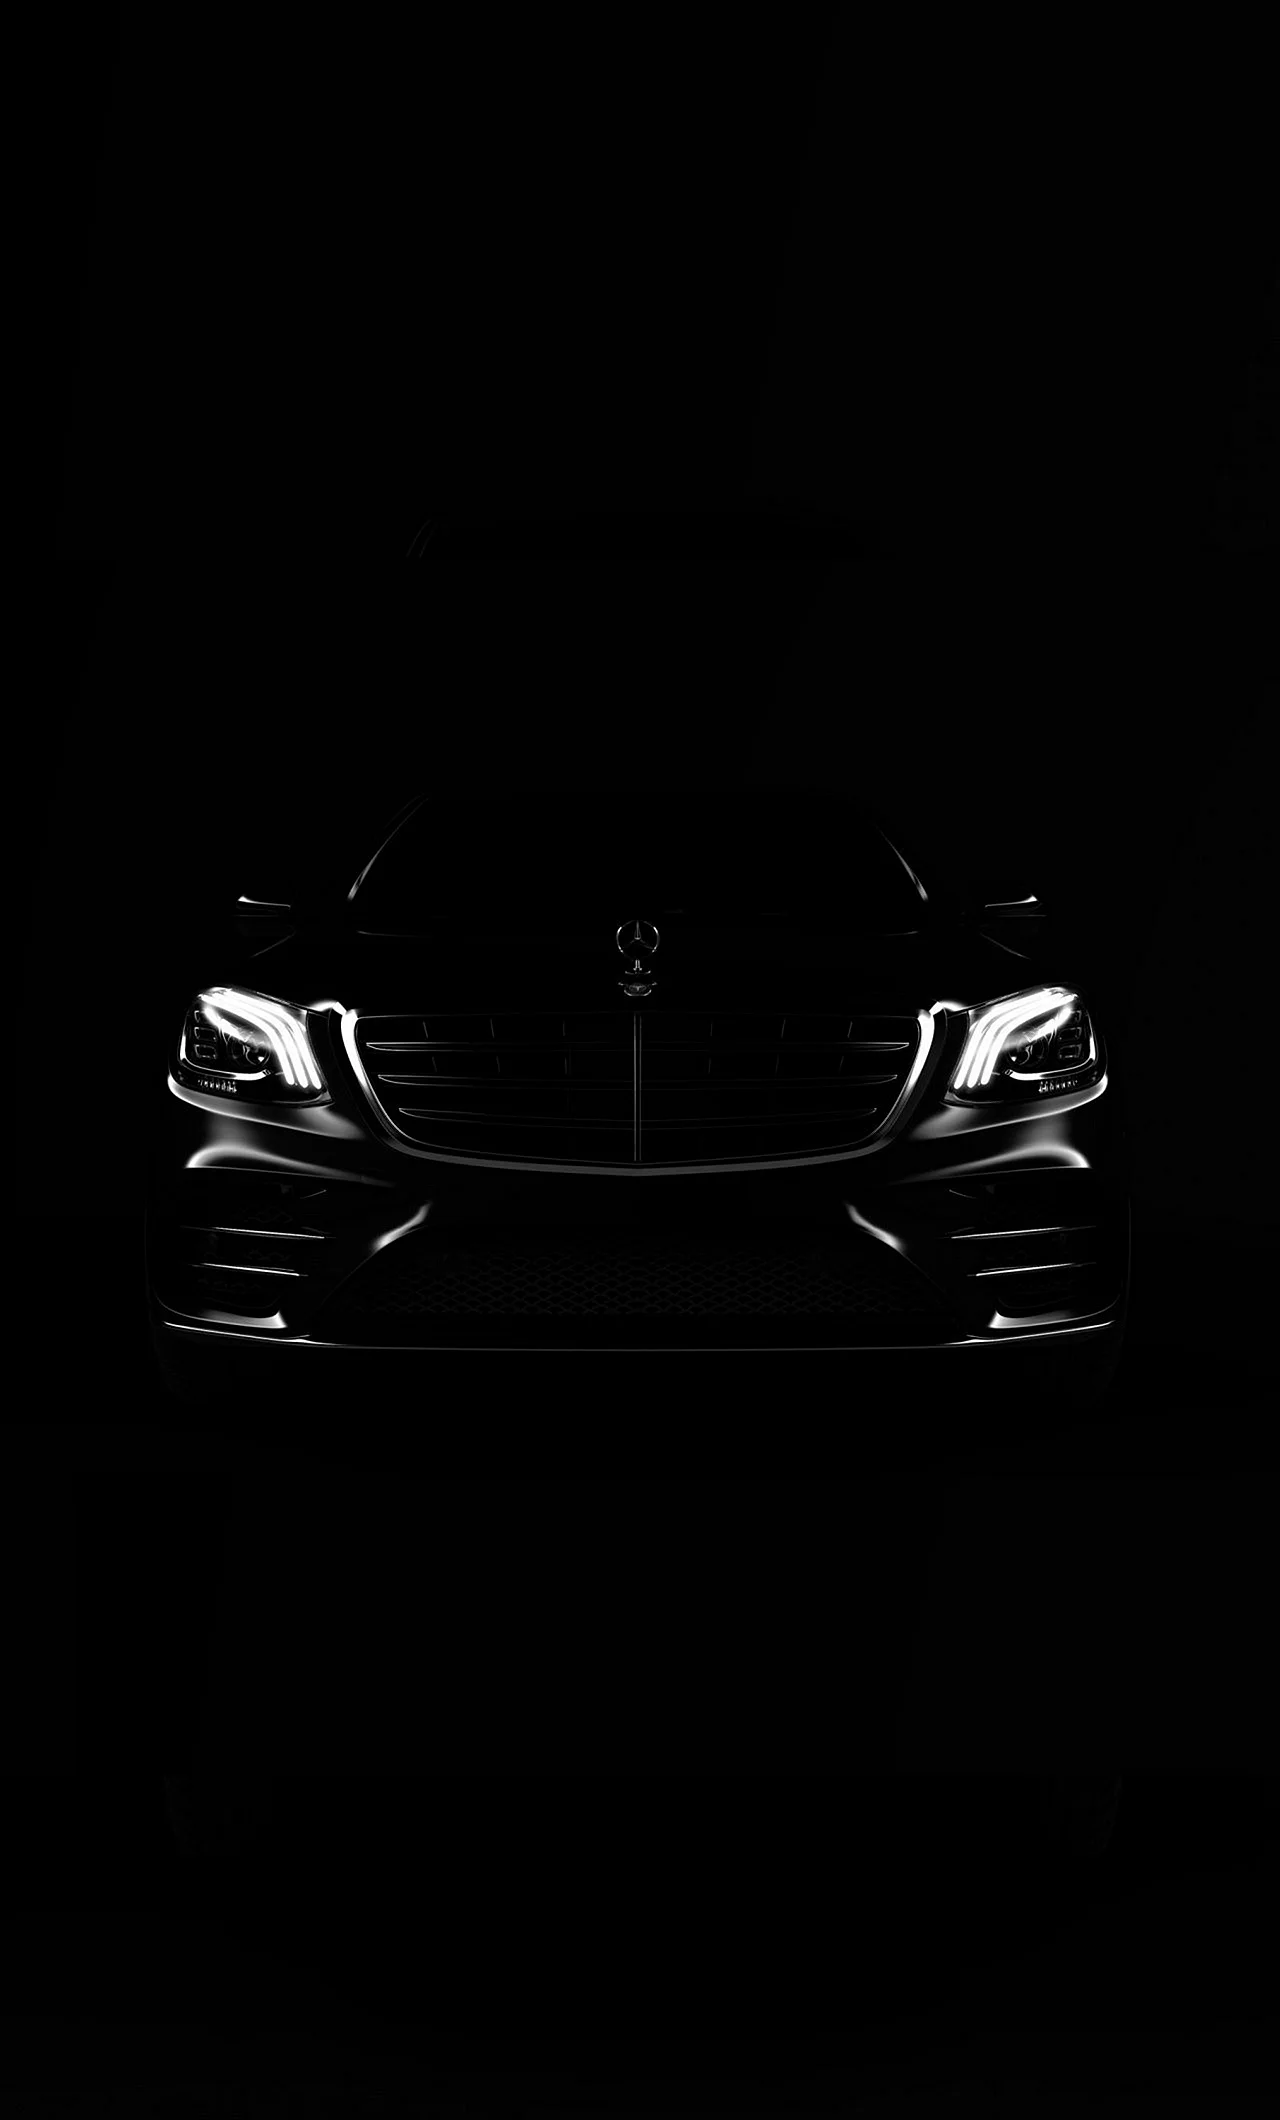 Mercedes Black Fon Wallpaper For iPhone